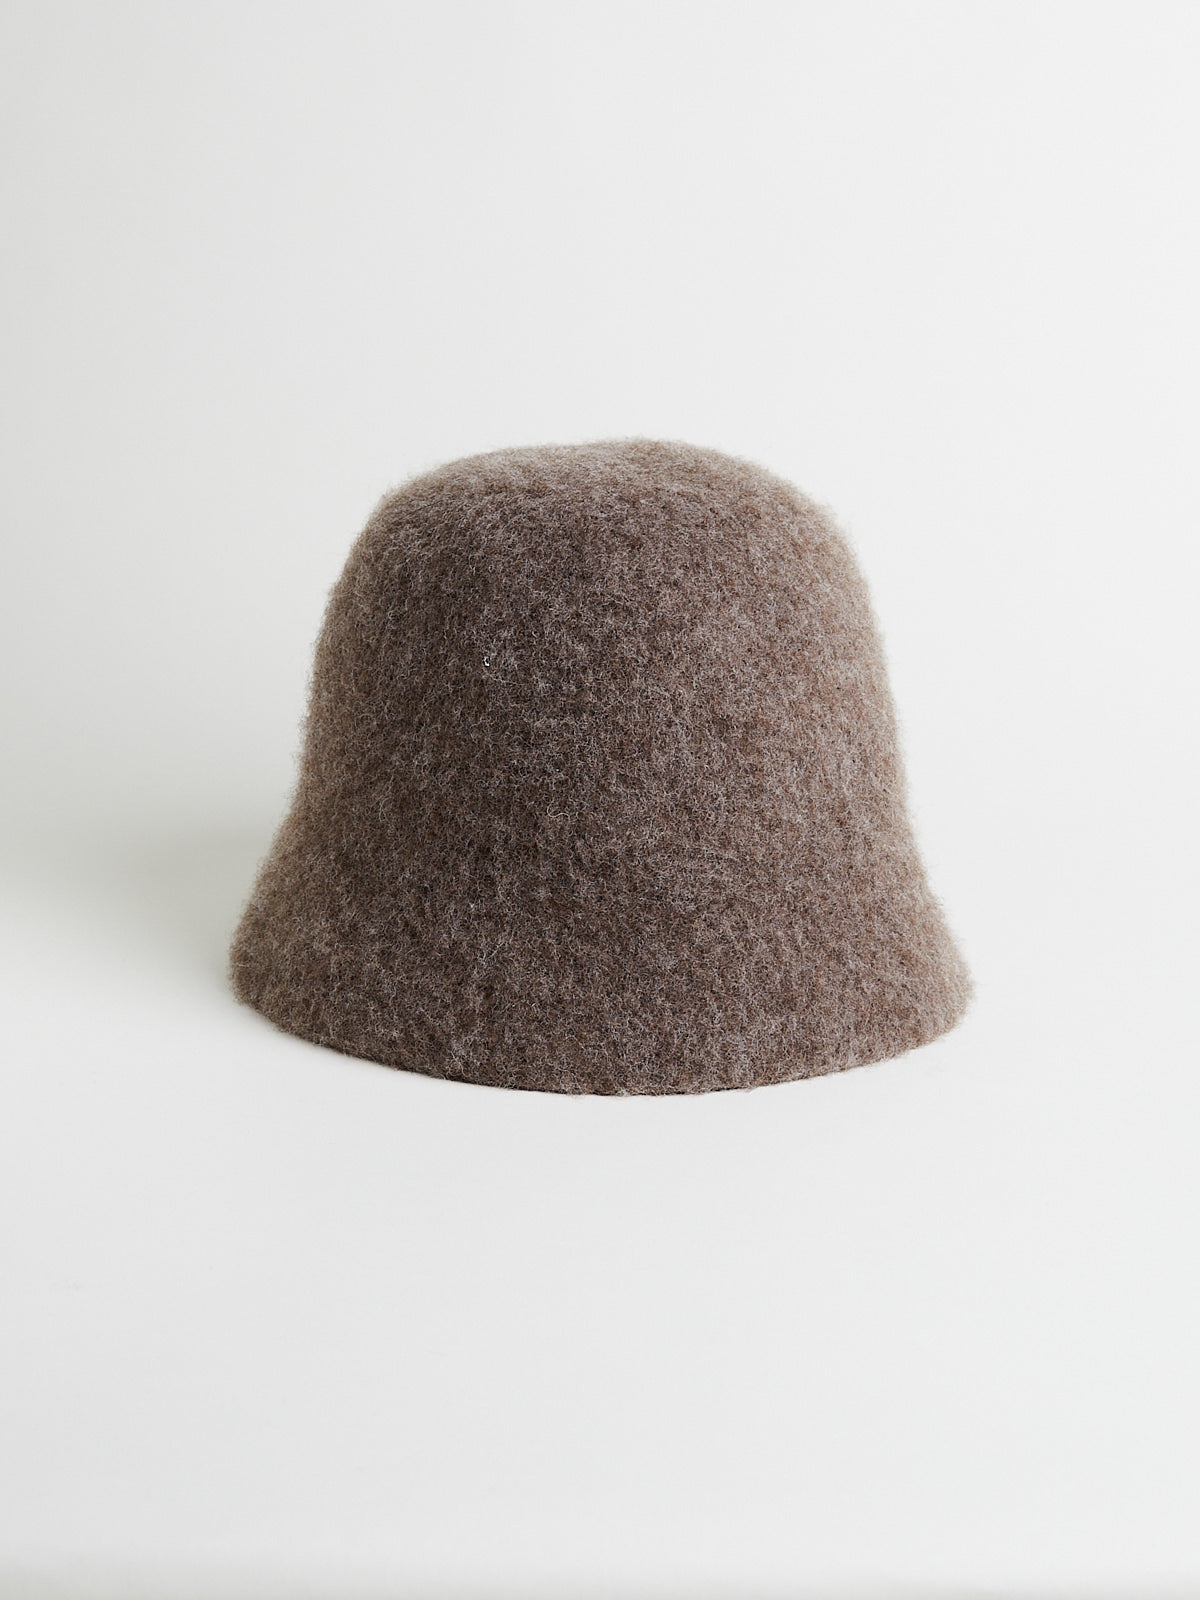 Bell Hat in Dark Brown